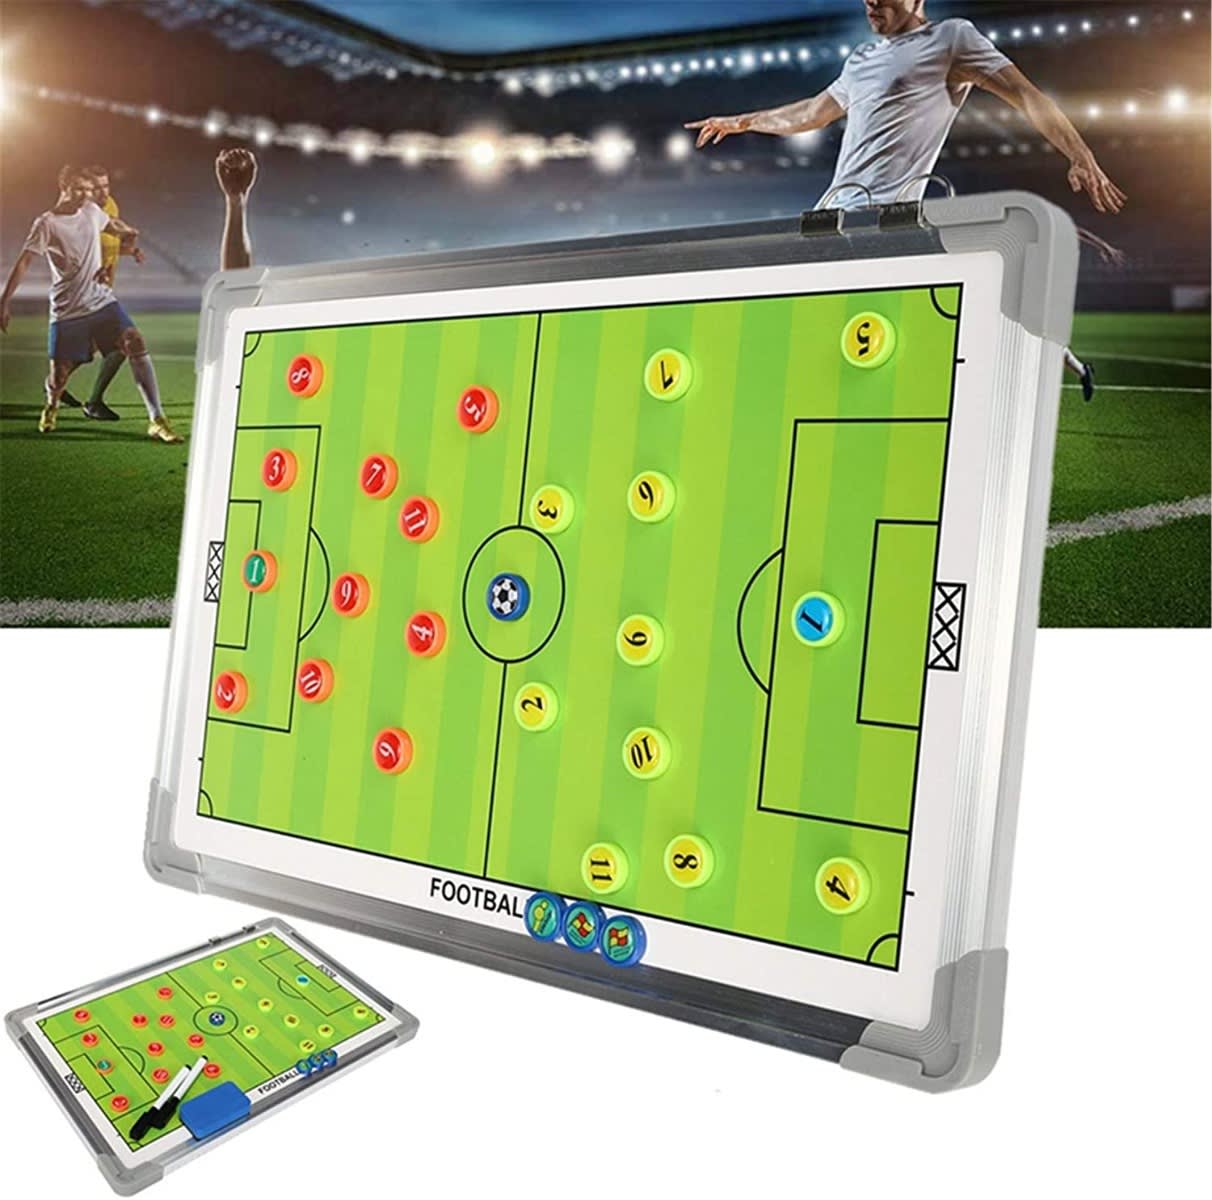 Magnetic Soccer Coaching Board 45x30cm Football